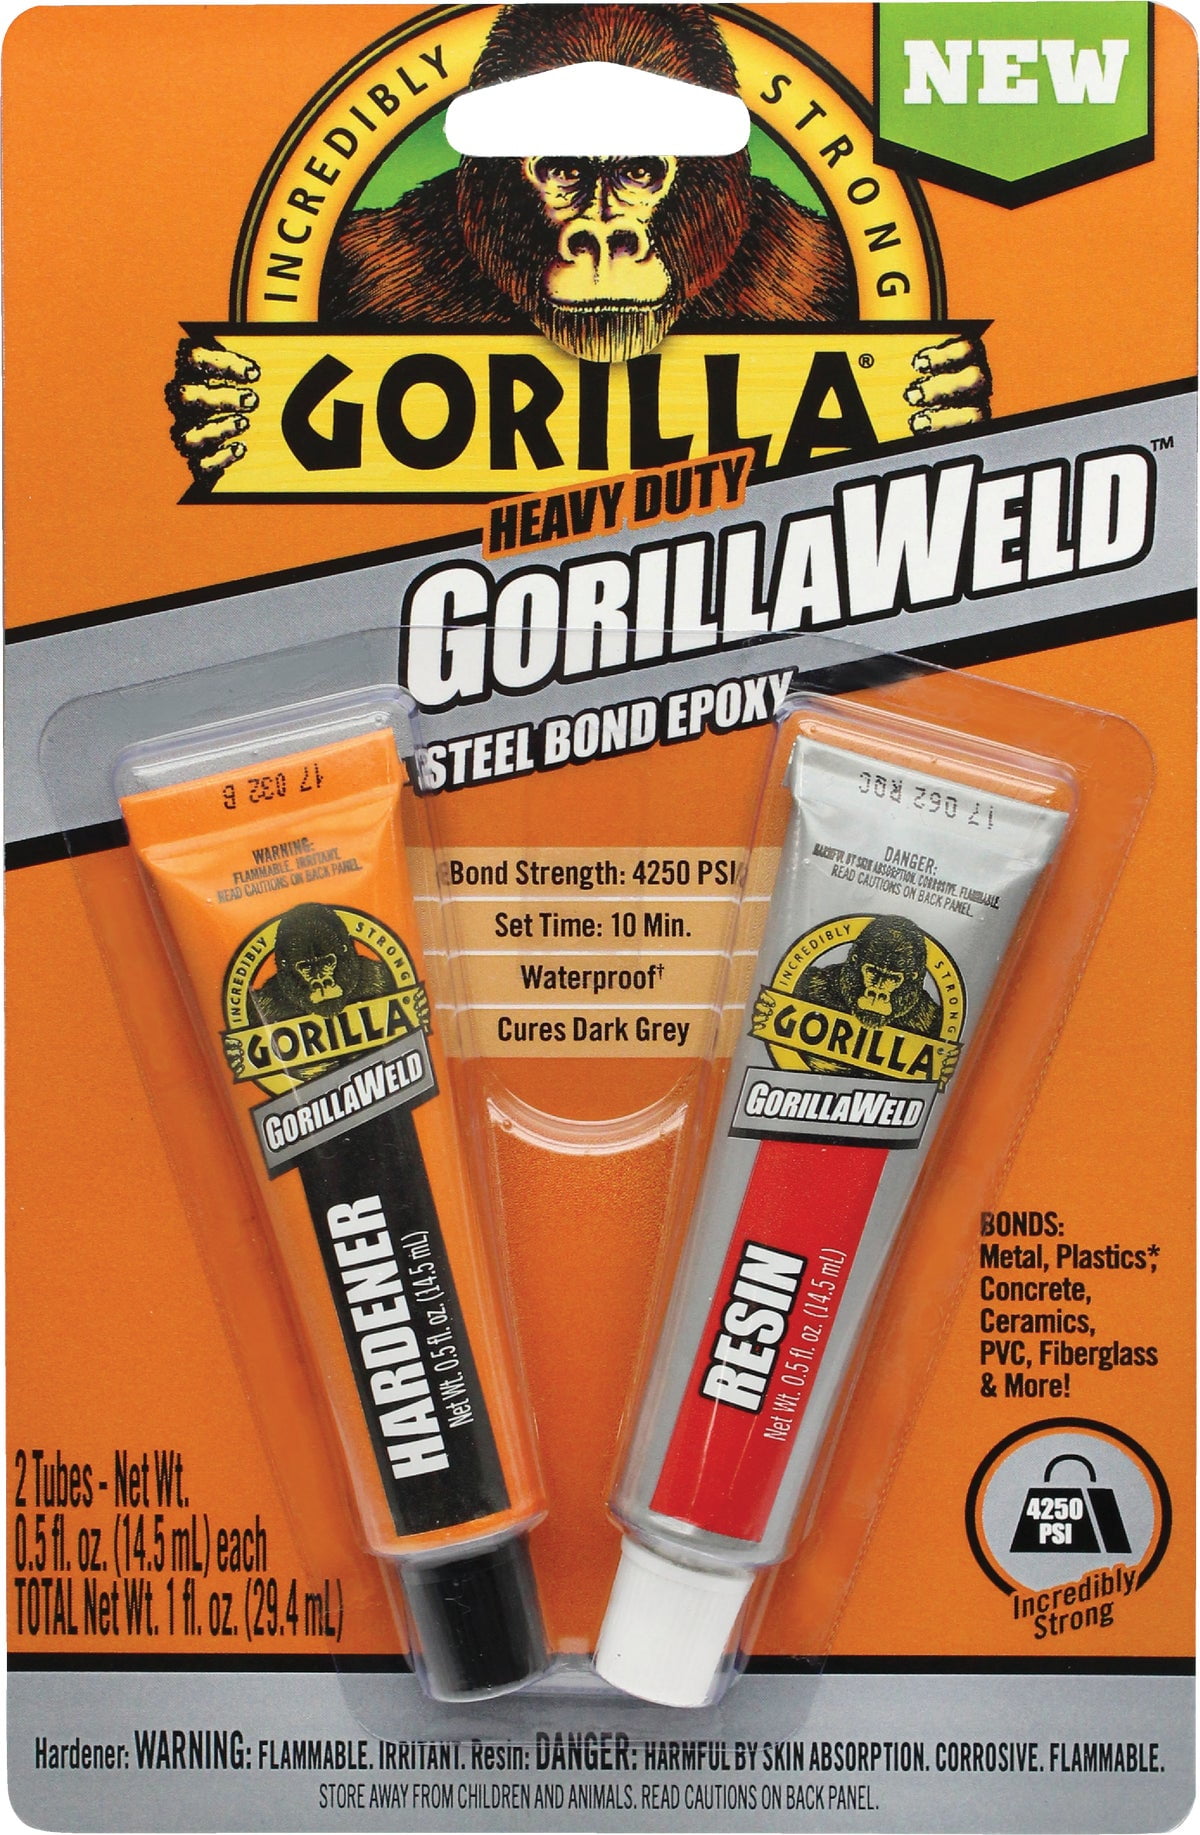 Gorilla Glue Epoxy Tube-.85oz (Pack of 2)